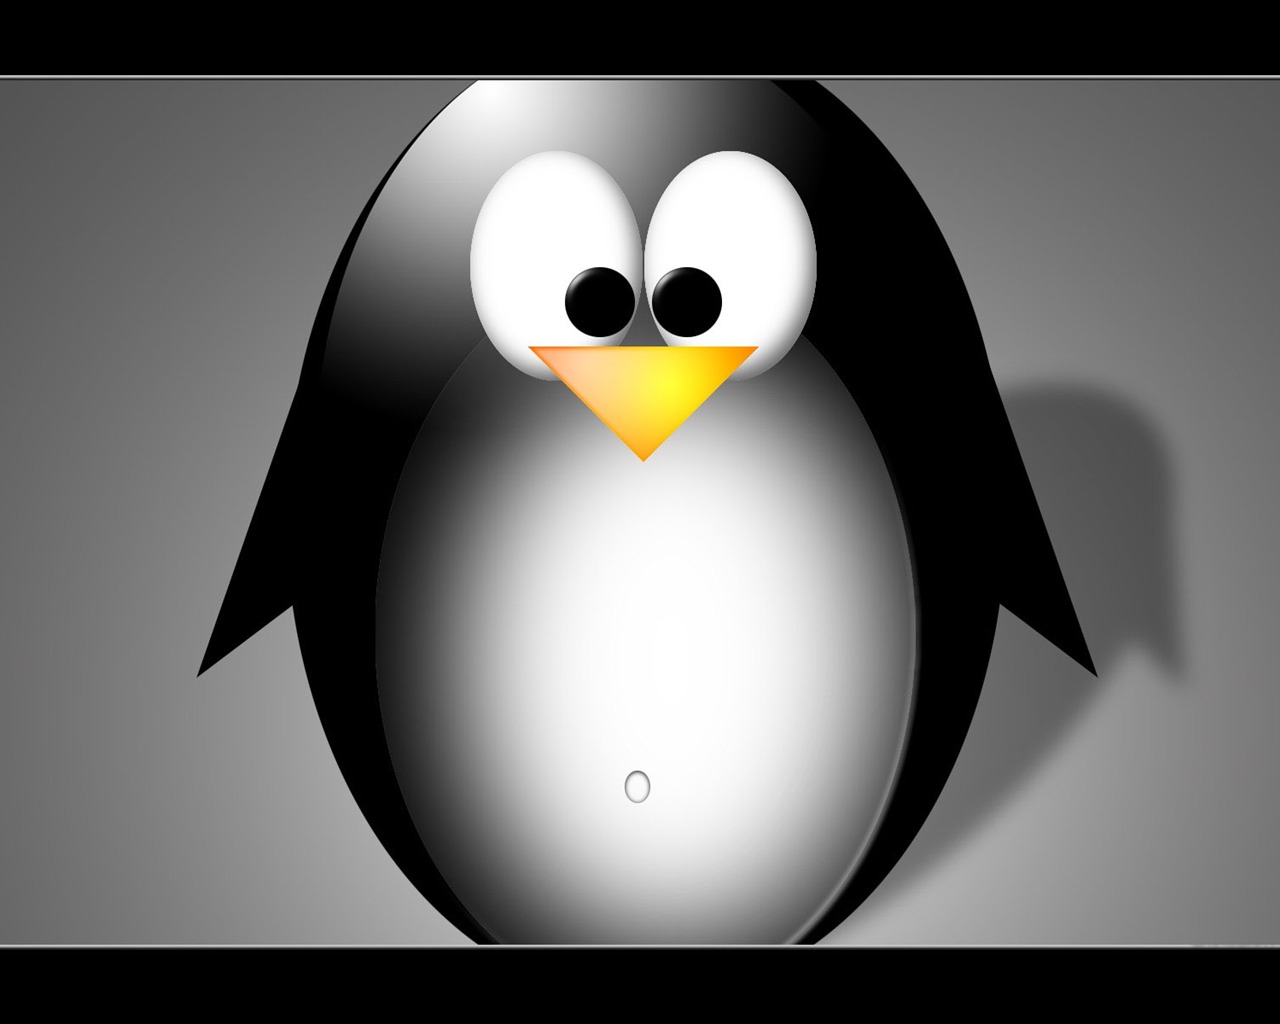 Linux 主题壁纸(一)3 - 1280x1024